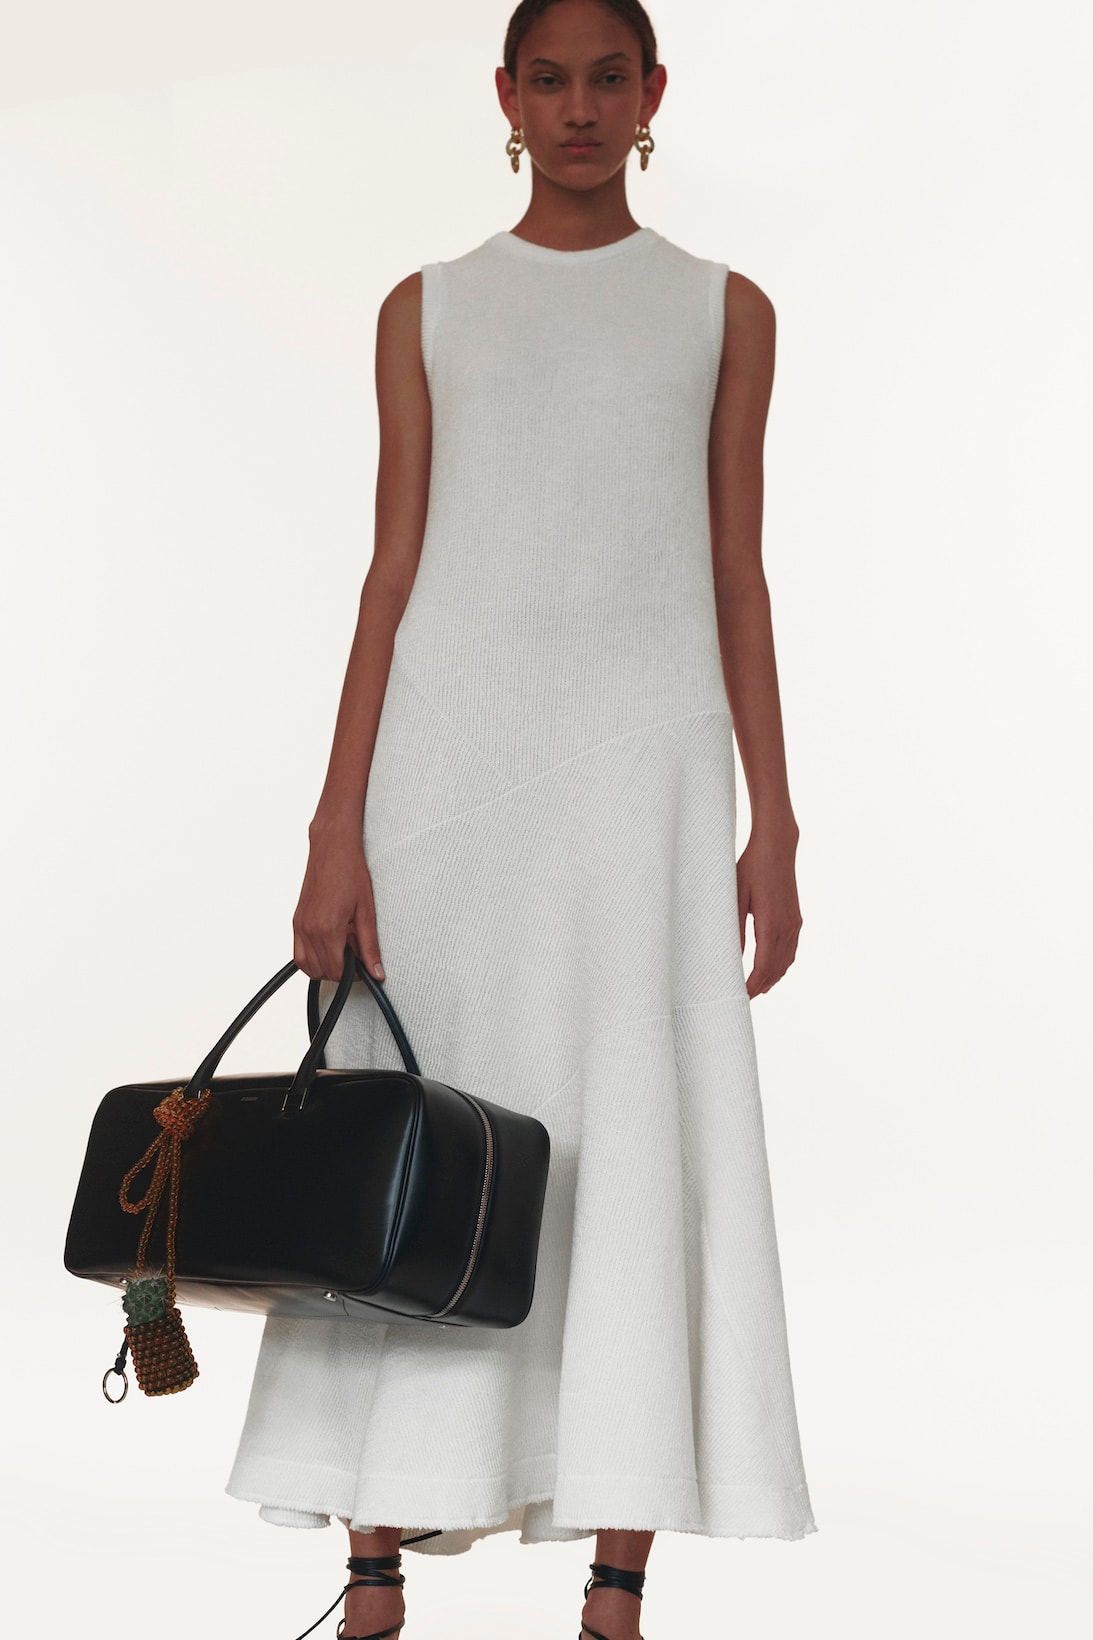 jil sander resort 2020 collection fashion designer minimal simplistic 